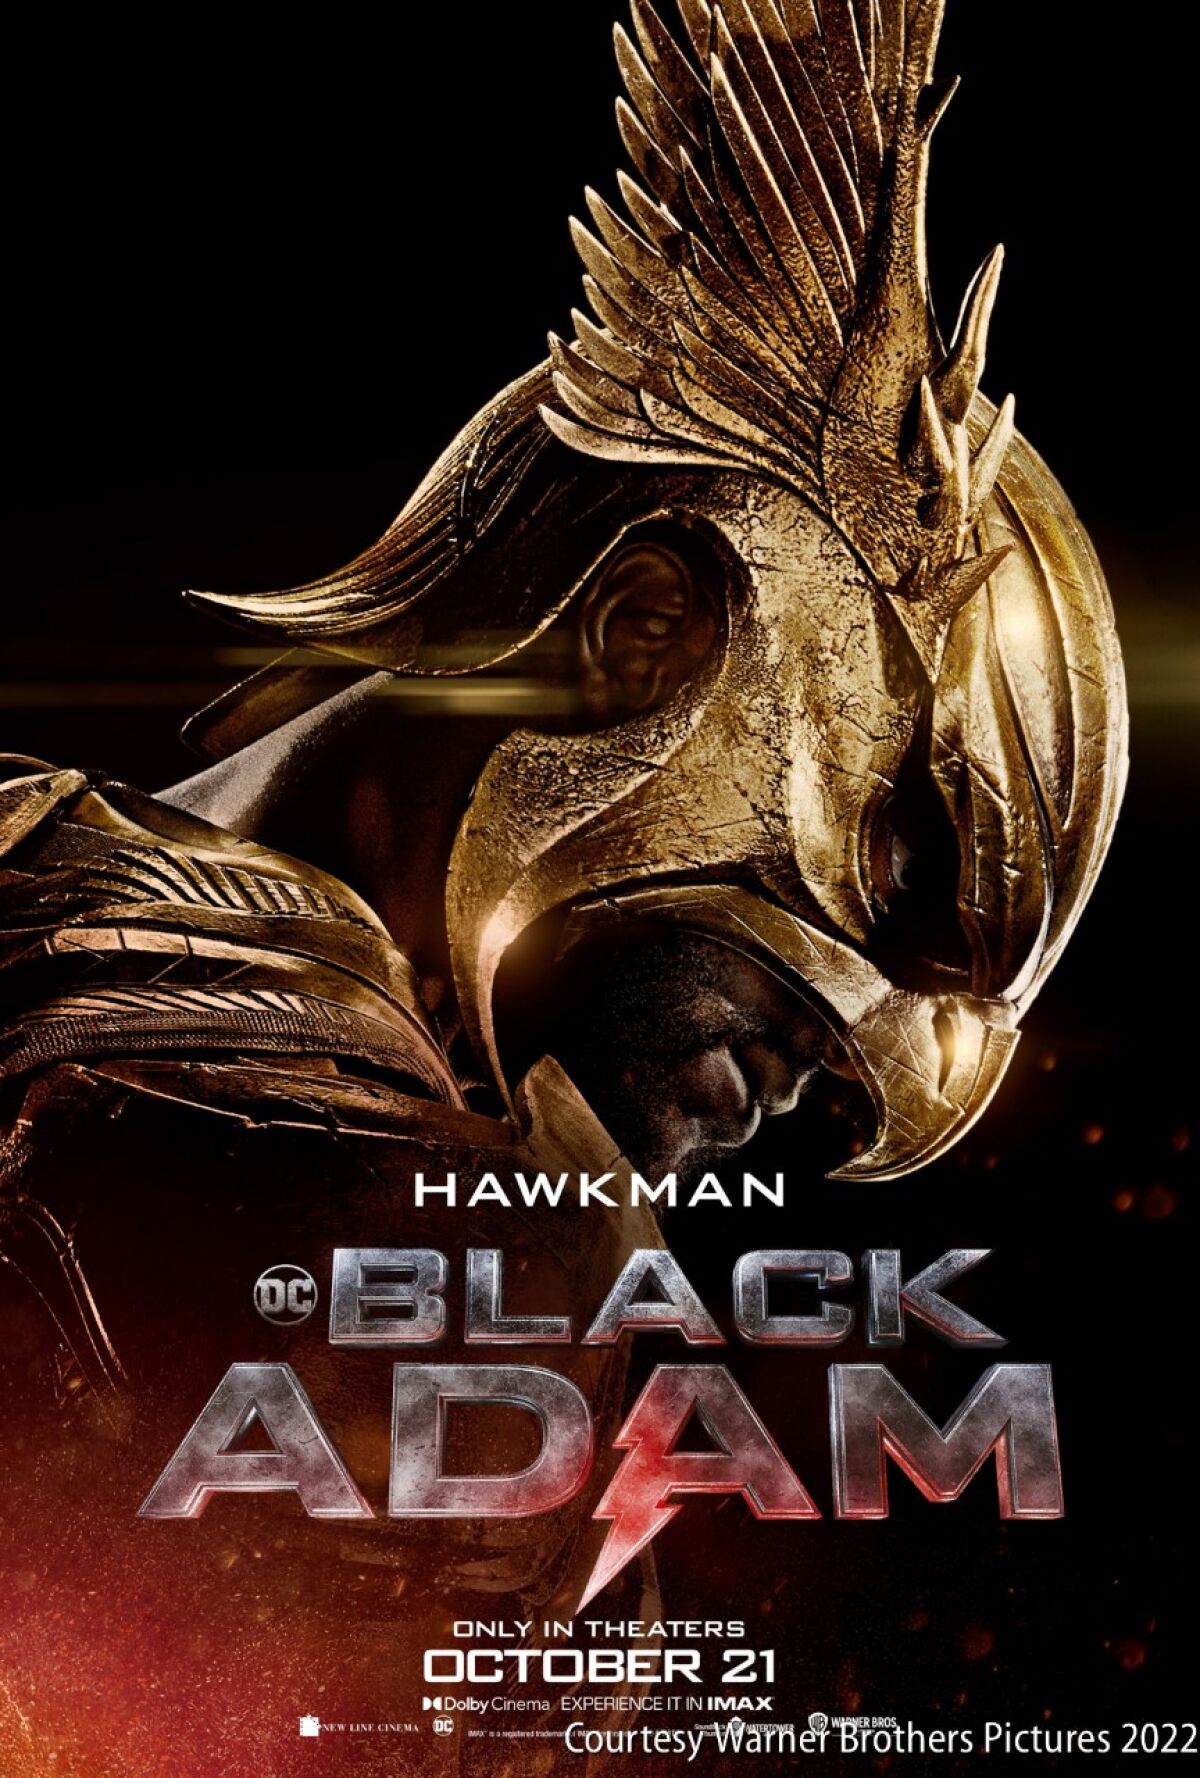 Movie character Hawkman